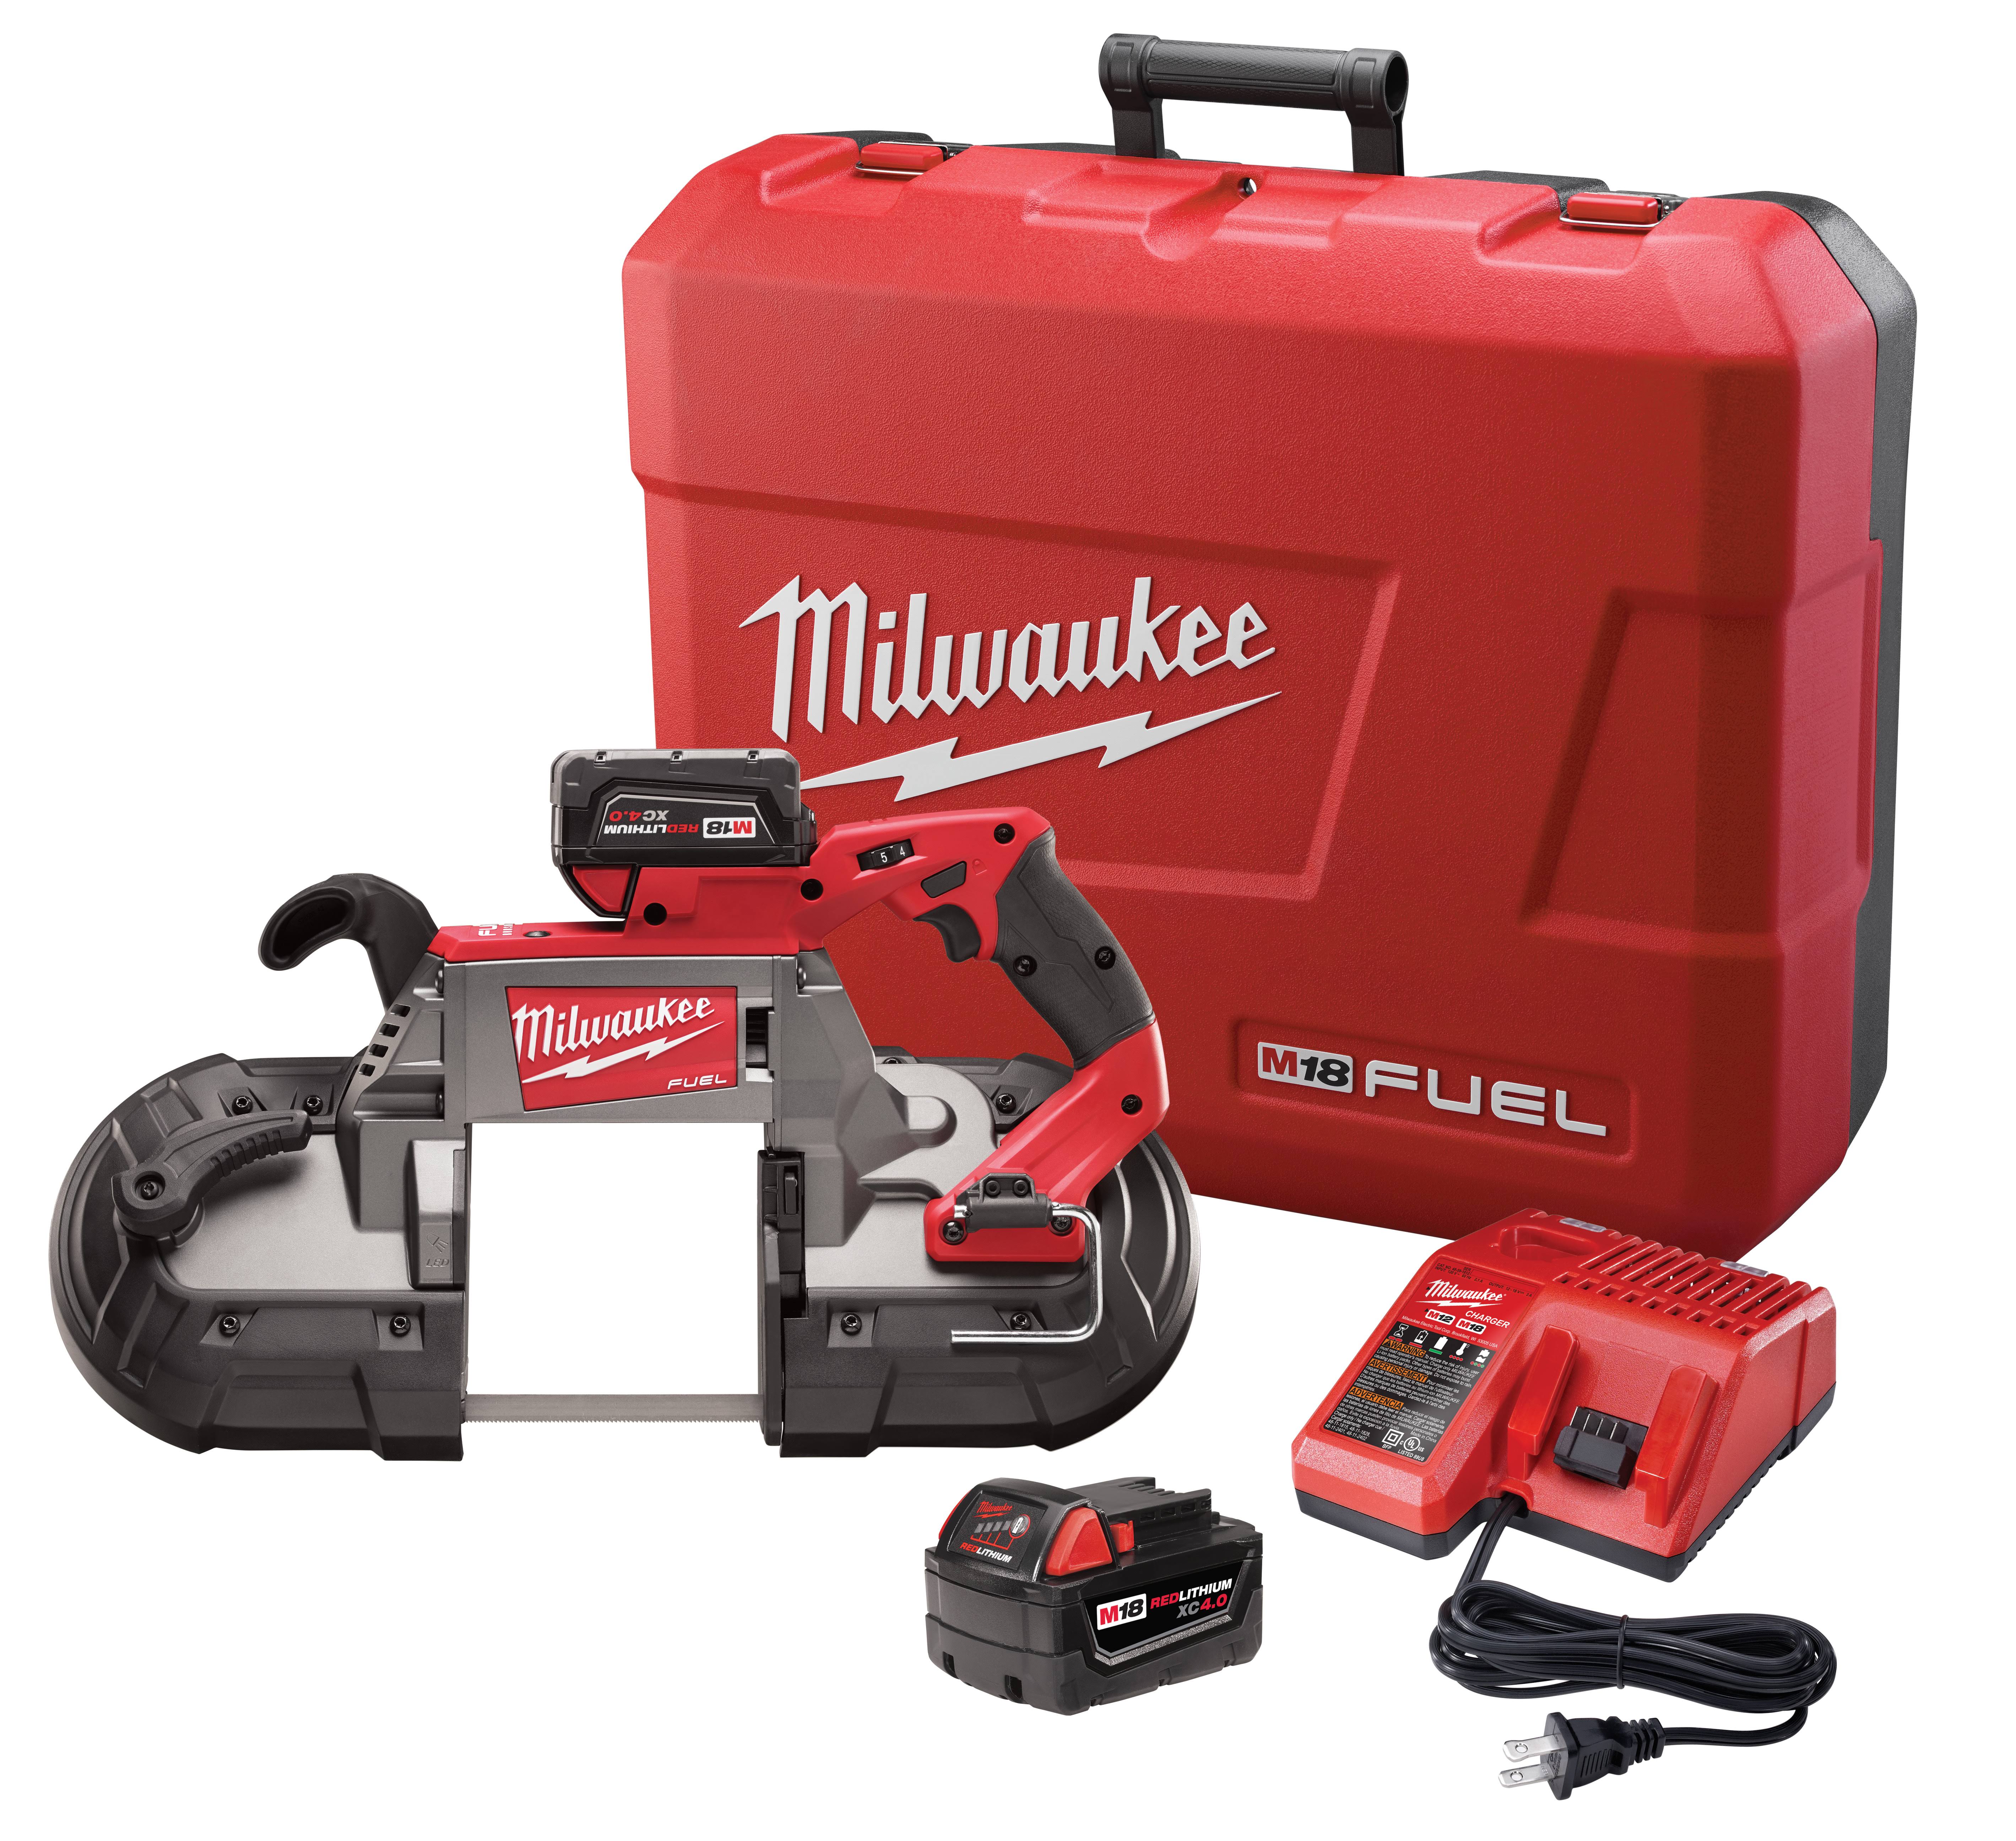 Milwaukee 2729-22 M18 Fuel Deep Cut Band Saw Kit